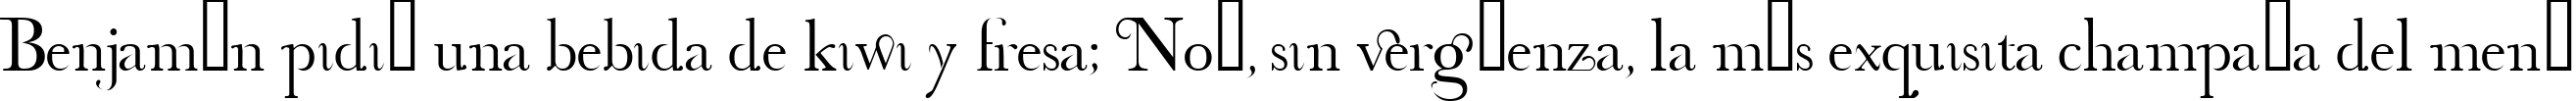 Пример написания шрифтом decorative fontFINAL текста на испанском